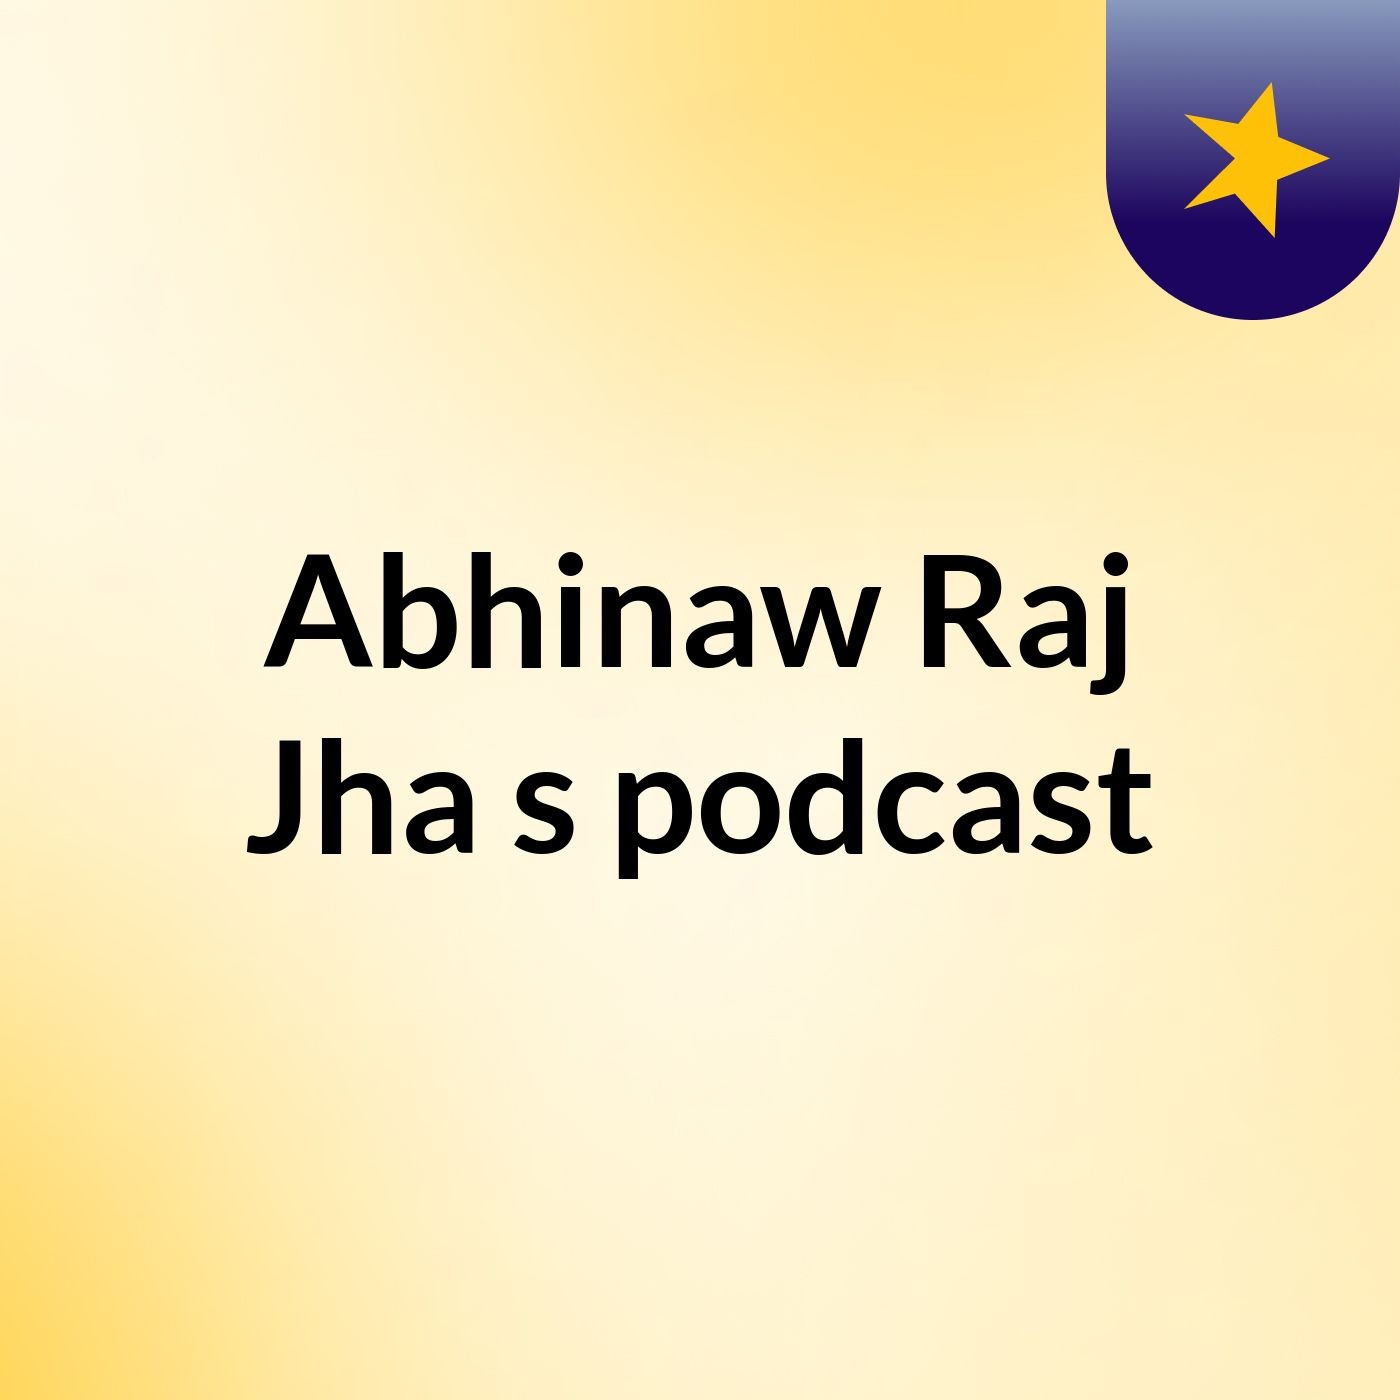 Episode 4 - Abhinaw Raj Jha's podcast